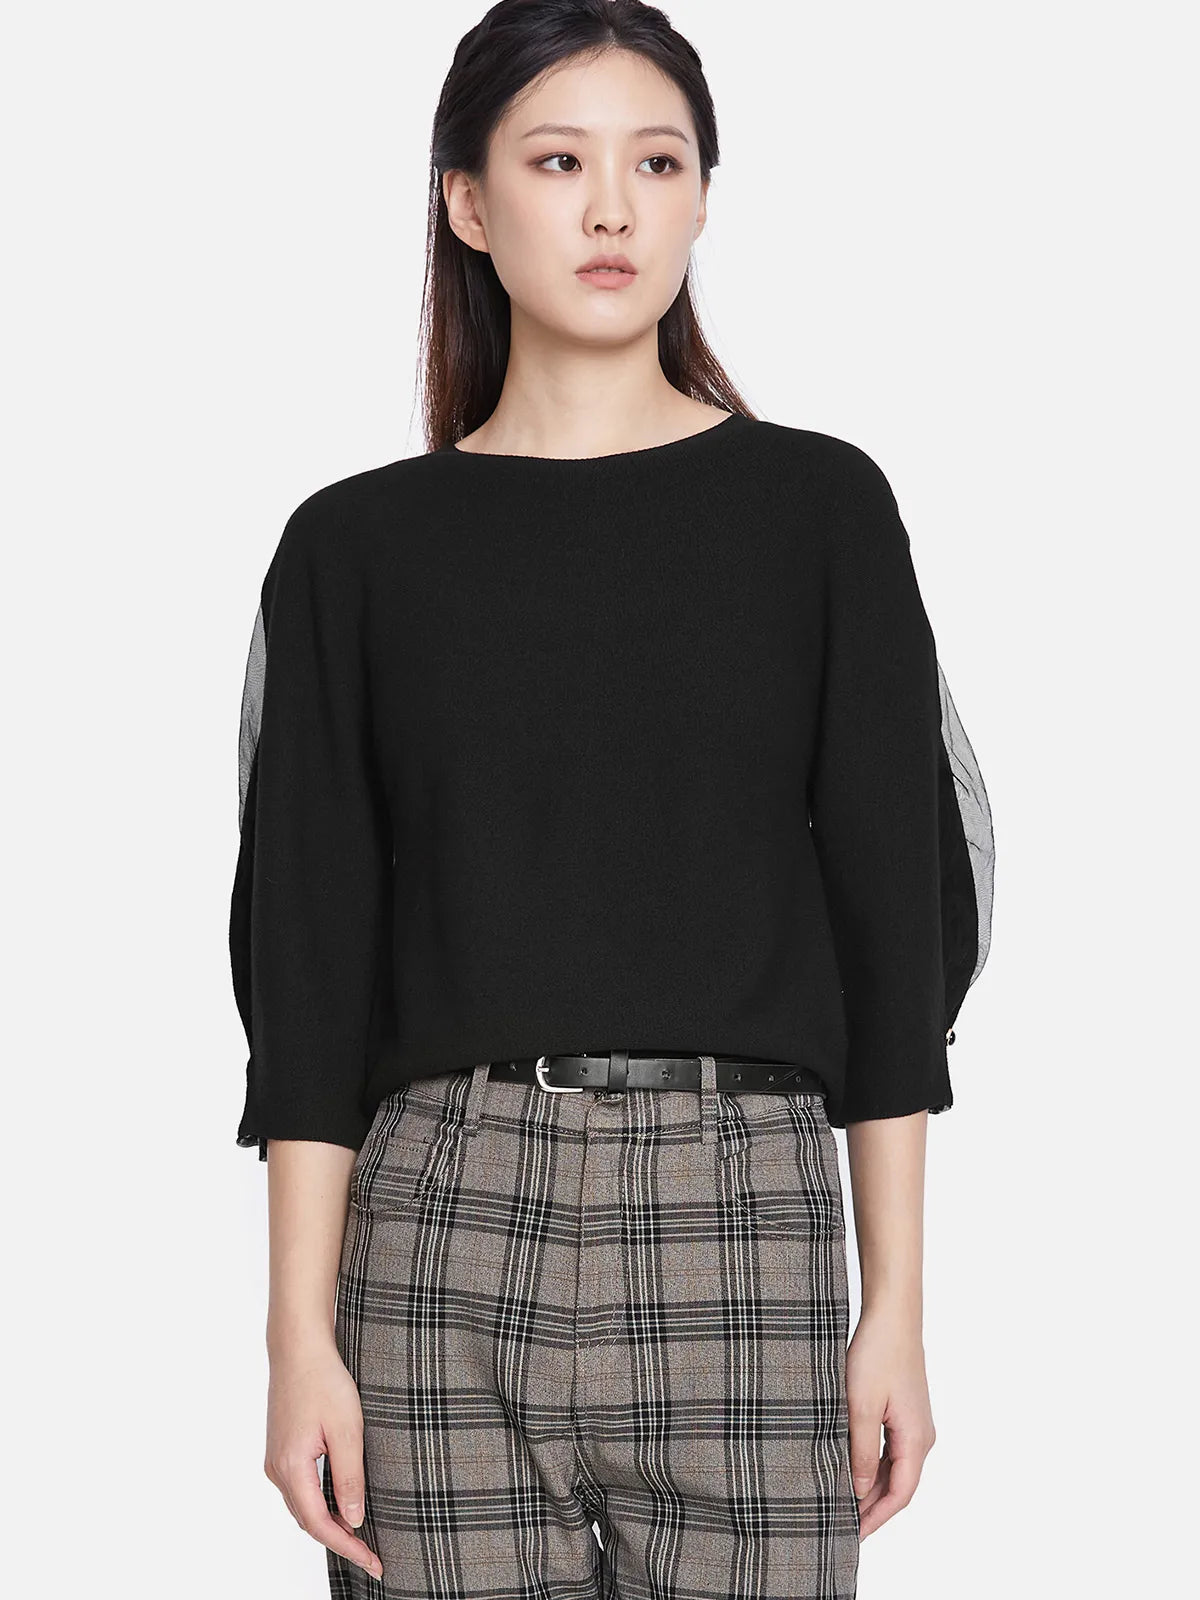 Mesh 3/4 Sleeve Black Sweater Cardigan